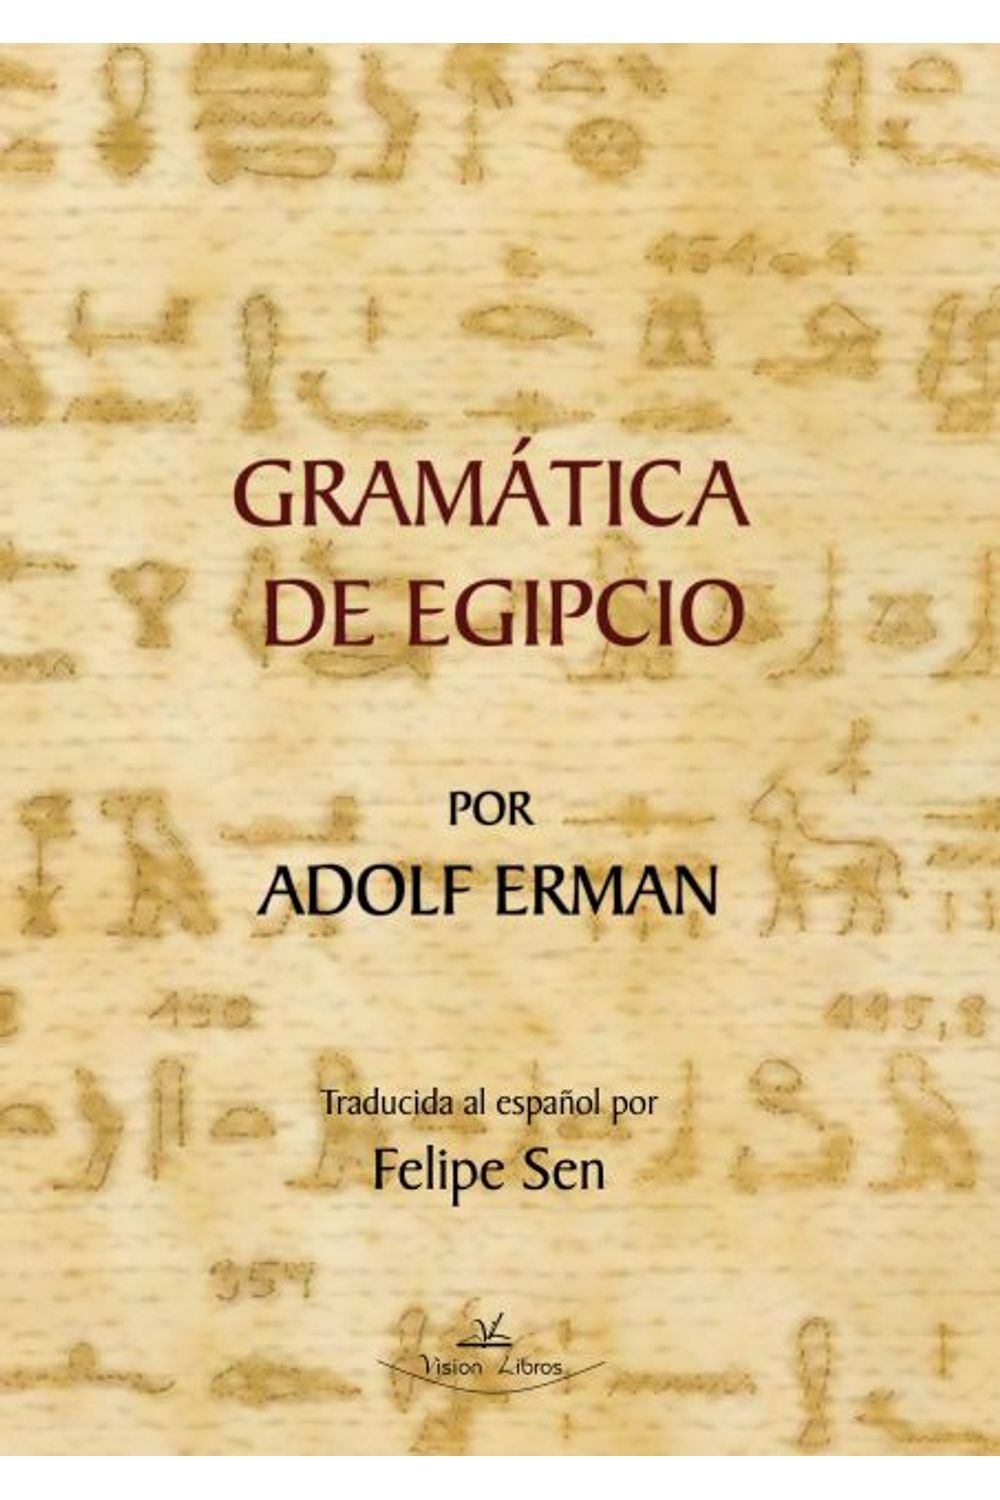 bm-gramatica-de-egipcio-por-adolf-erman-grupo-editor-vision-net-9788498868272